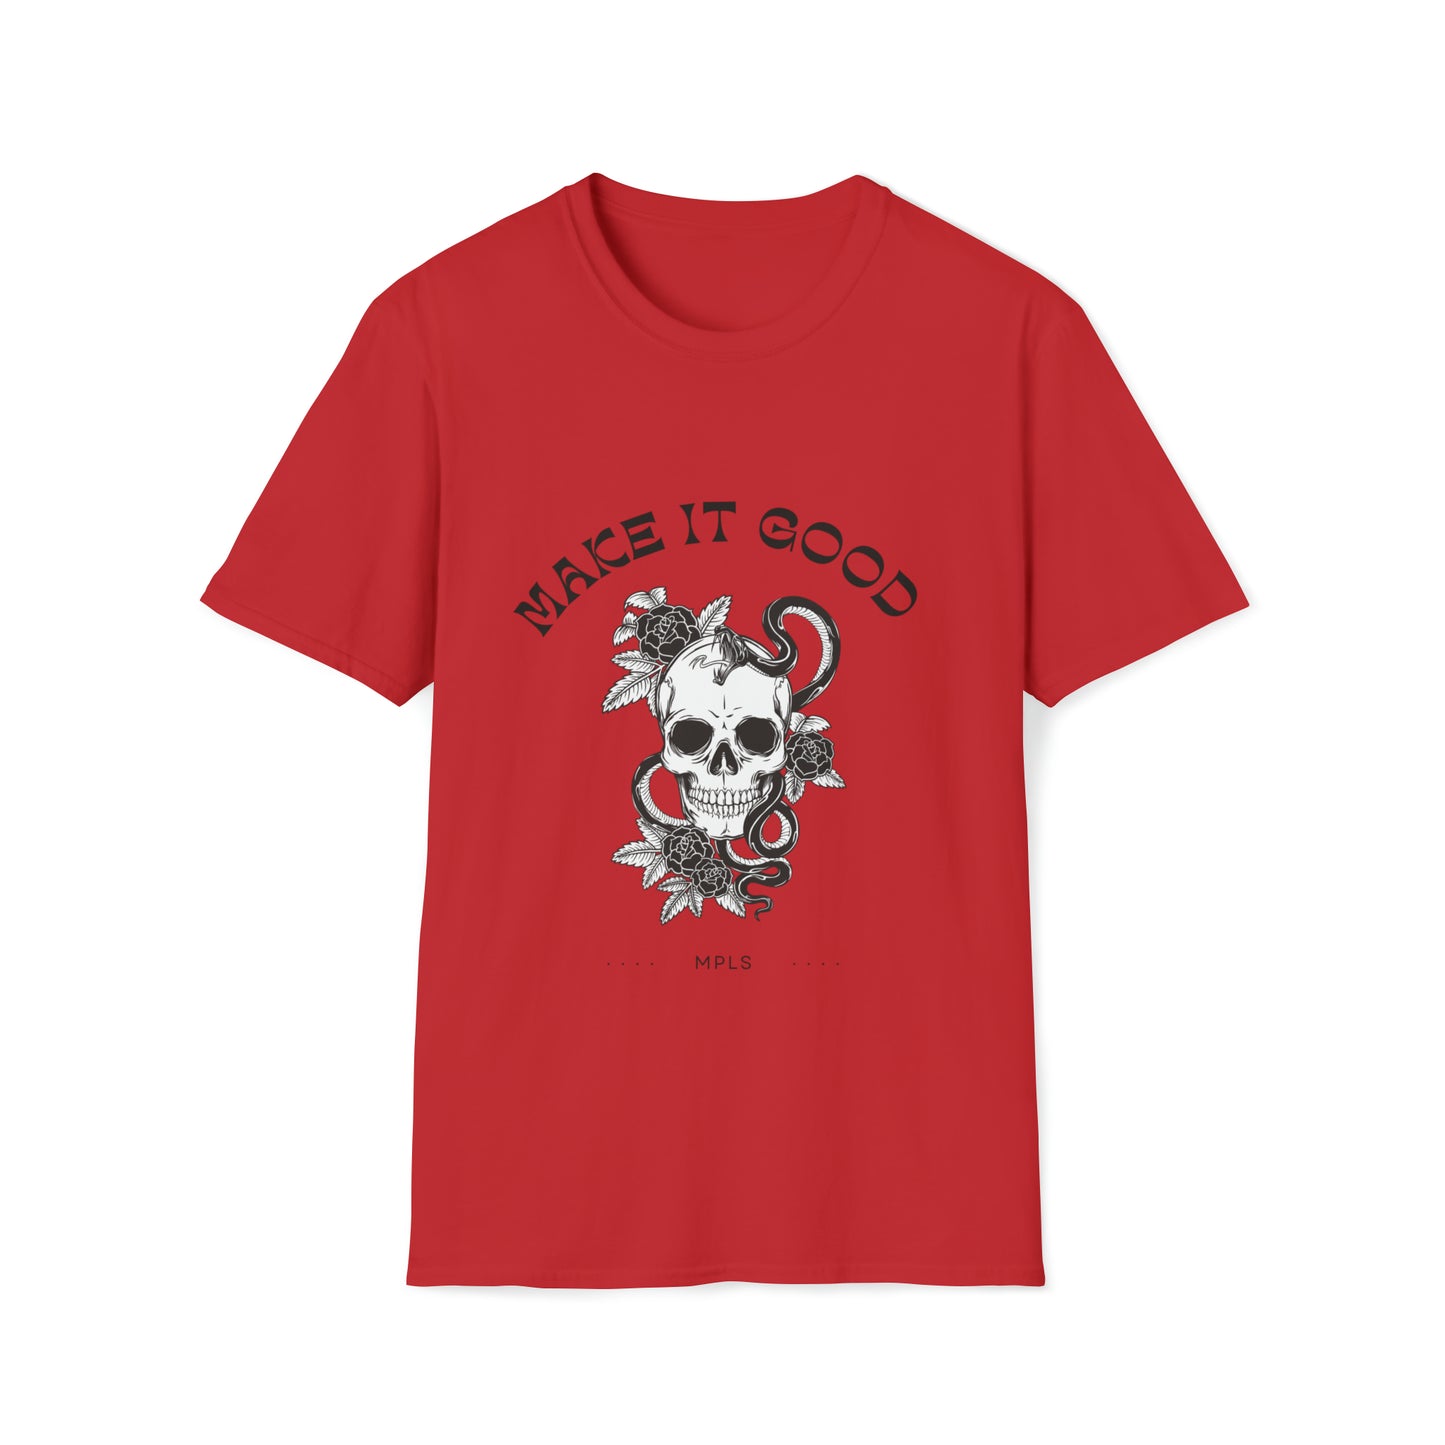 Make It Good Skull, Snake, & Roses Unisex Softstyle T-Shirt